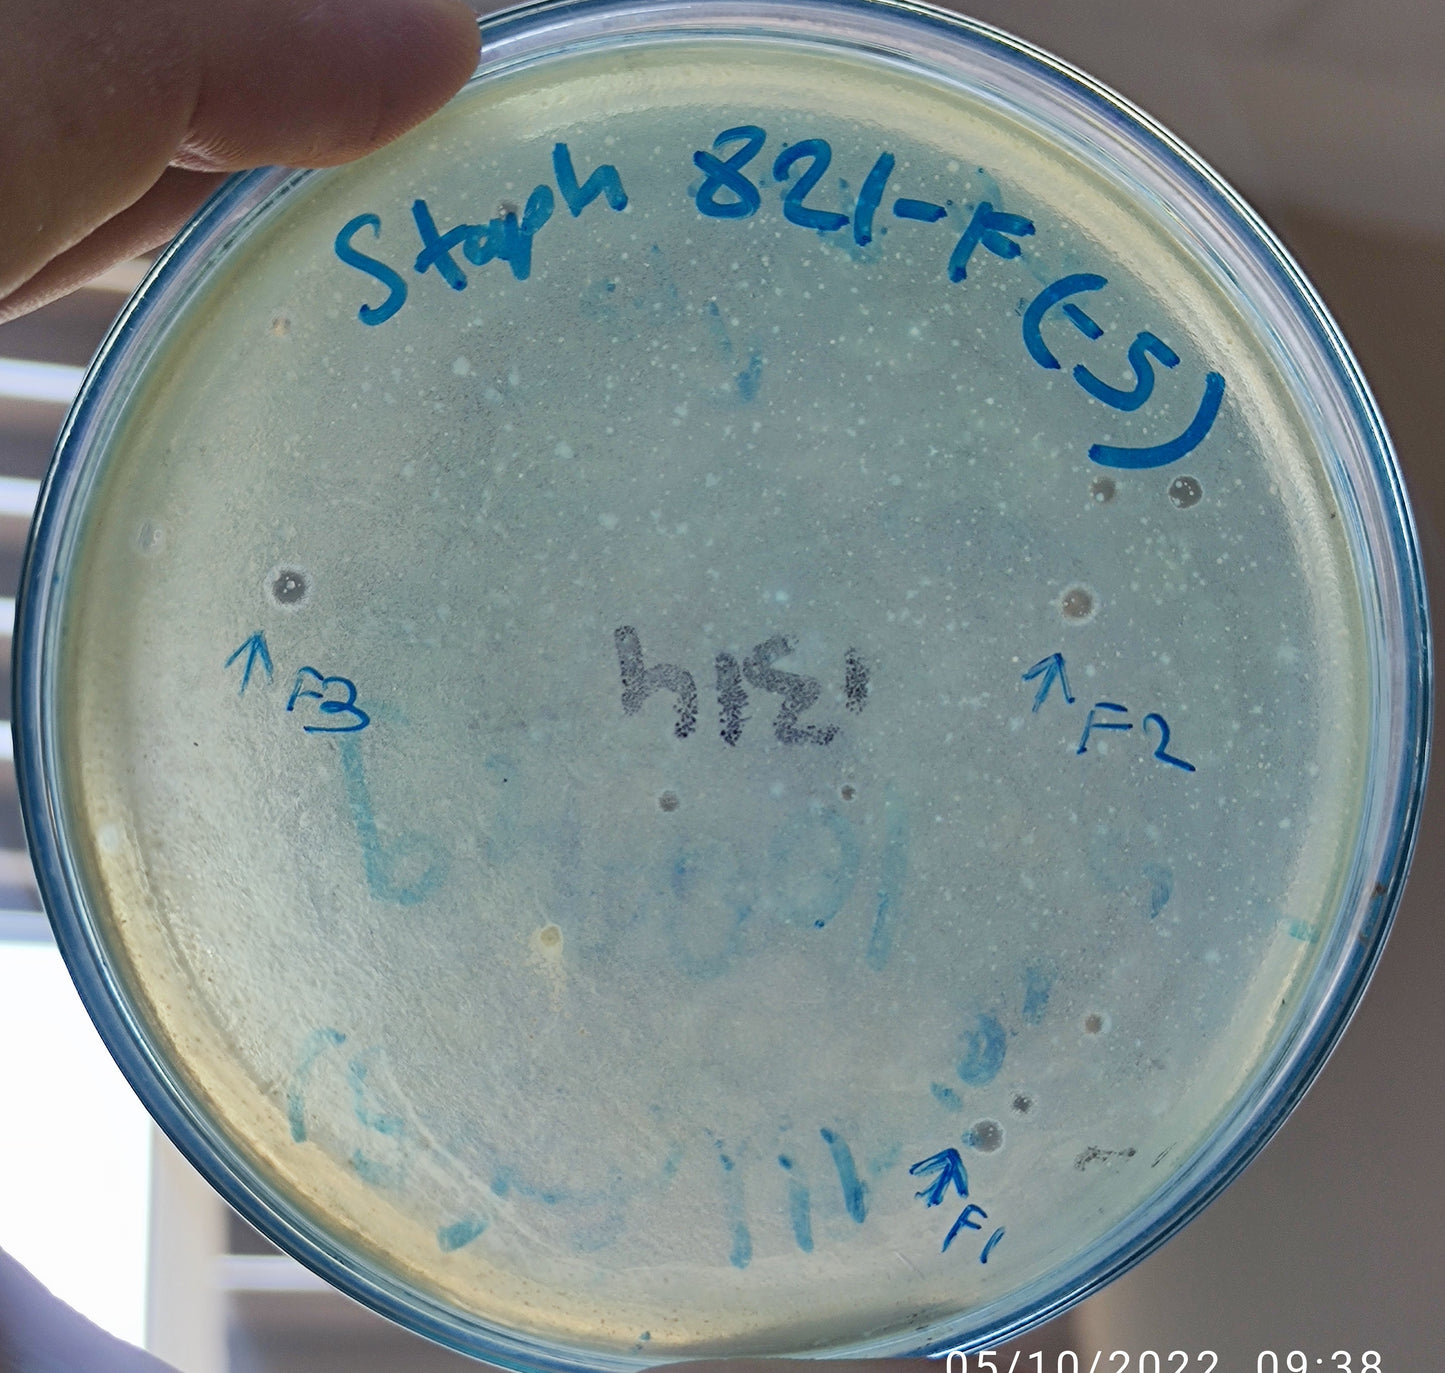 Staphylococcus aureus bacteriophage 152821F